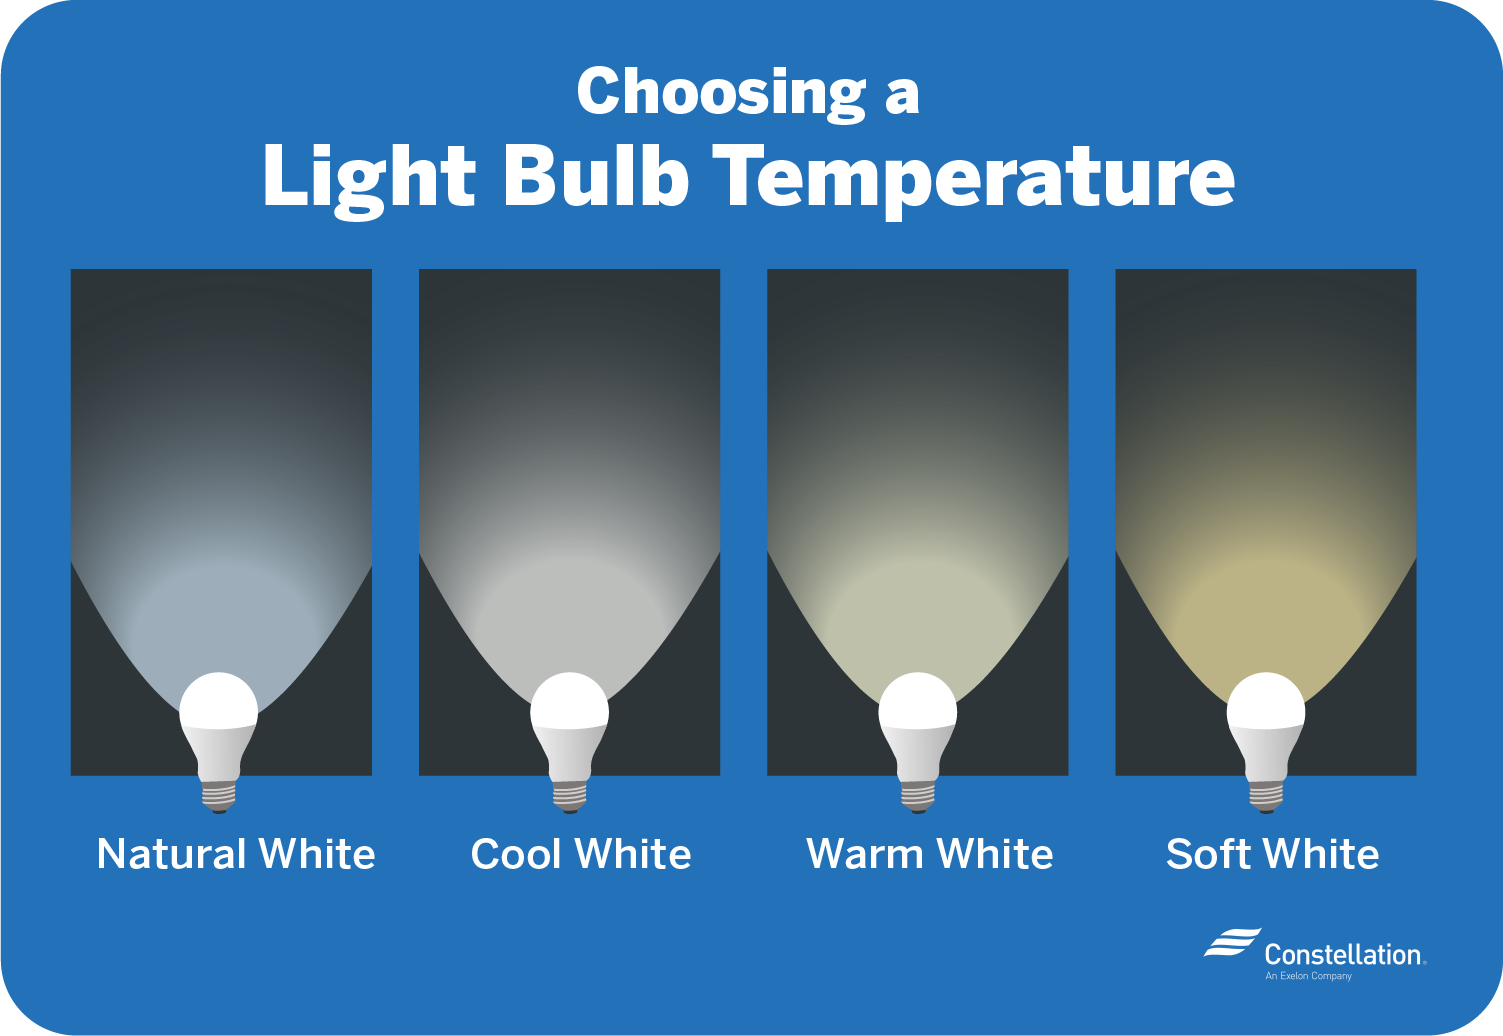 Choosing a light bulb temperature